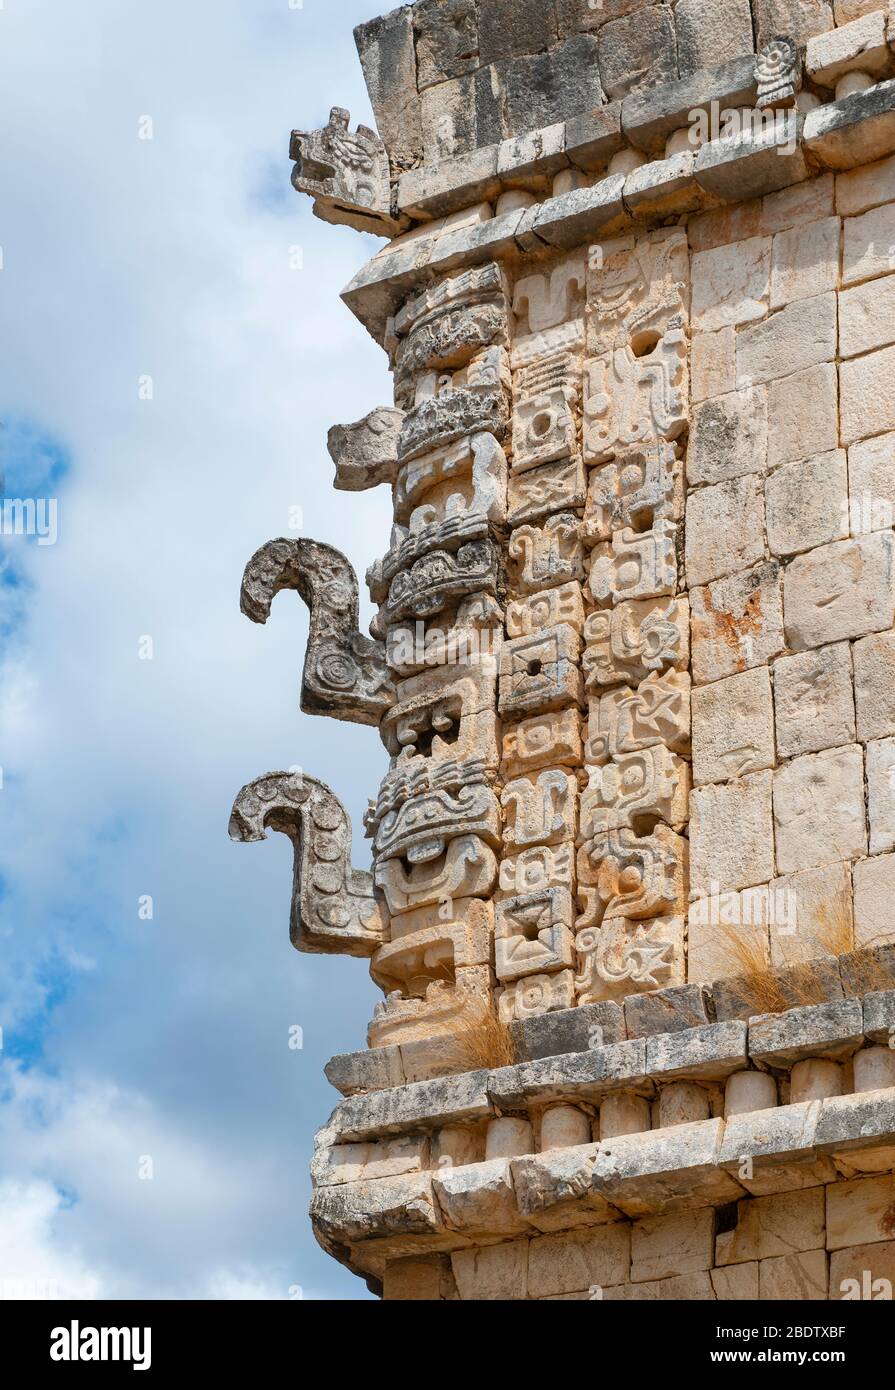 Sculpture of the Mayan Rain God Chaac in the archaeological site of Uxmal near Merida, Yucatan Peninsula, Mexico. Stock Photo